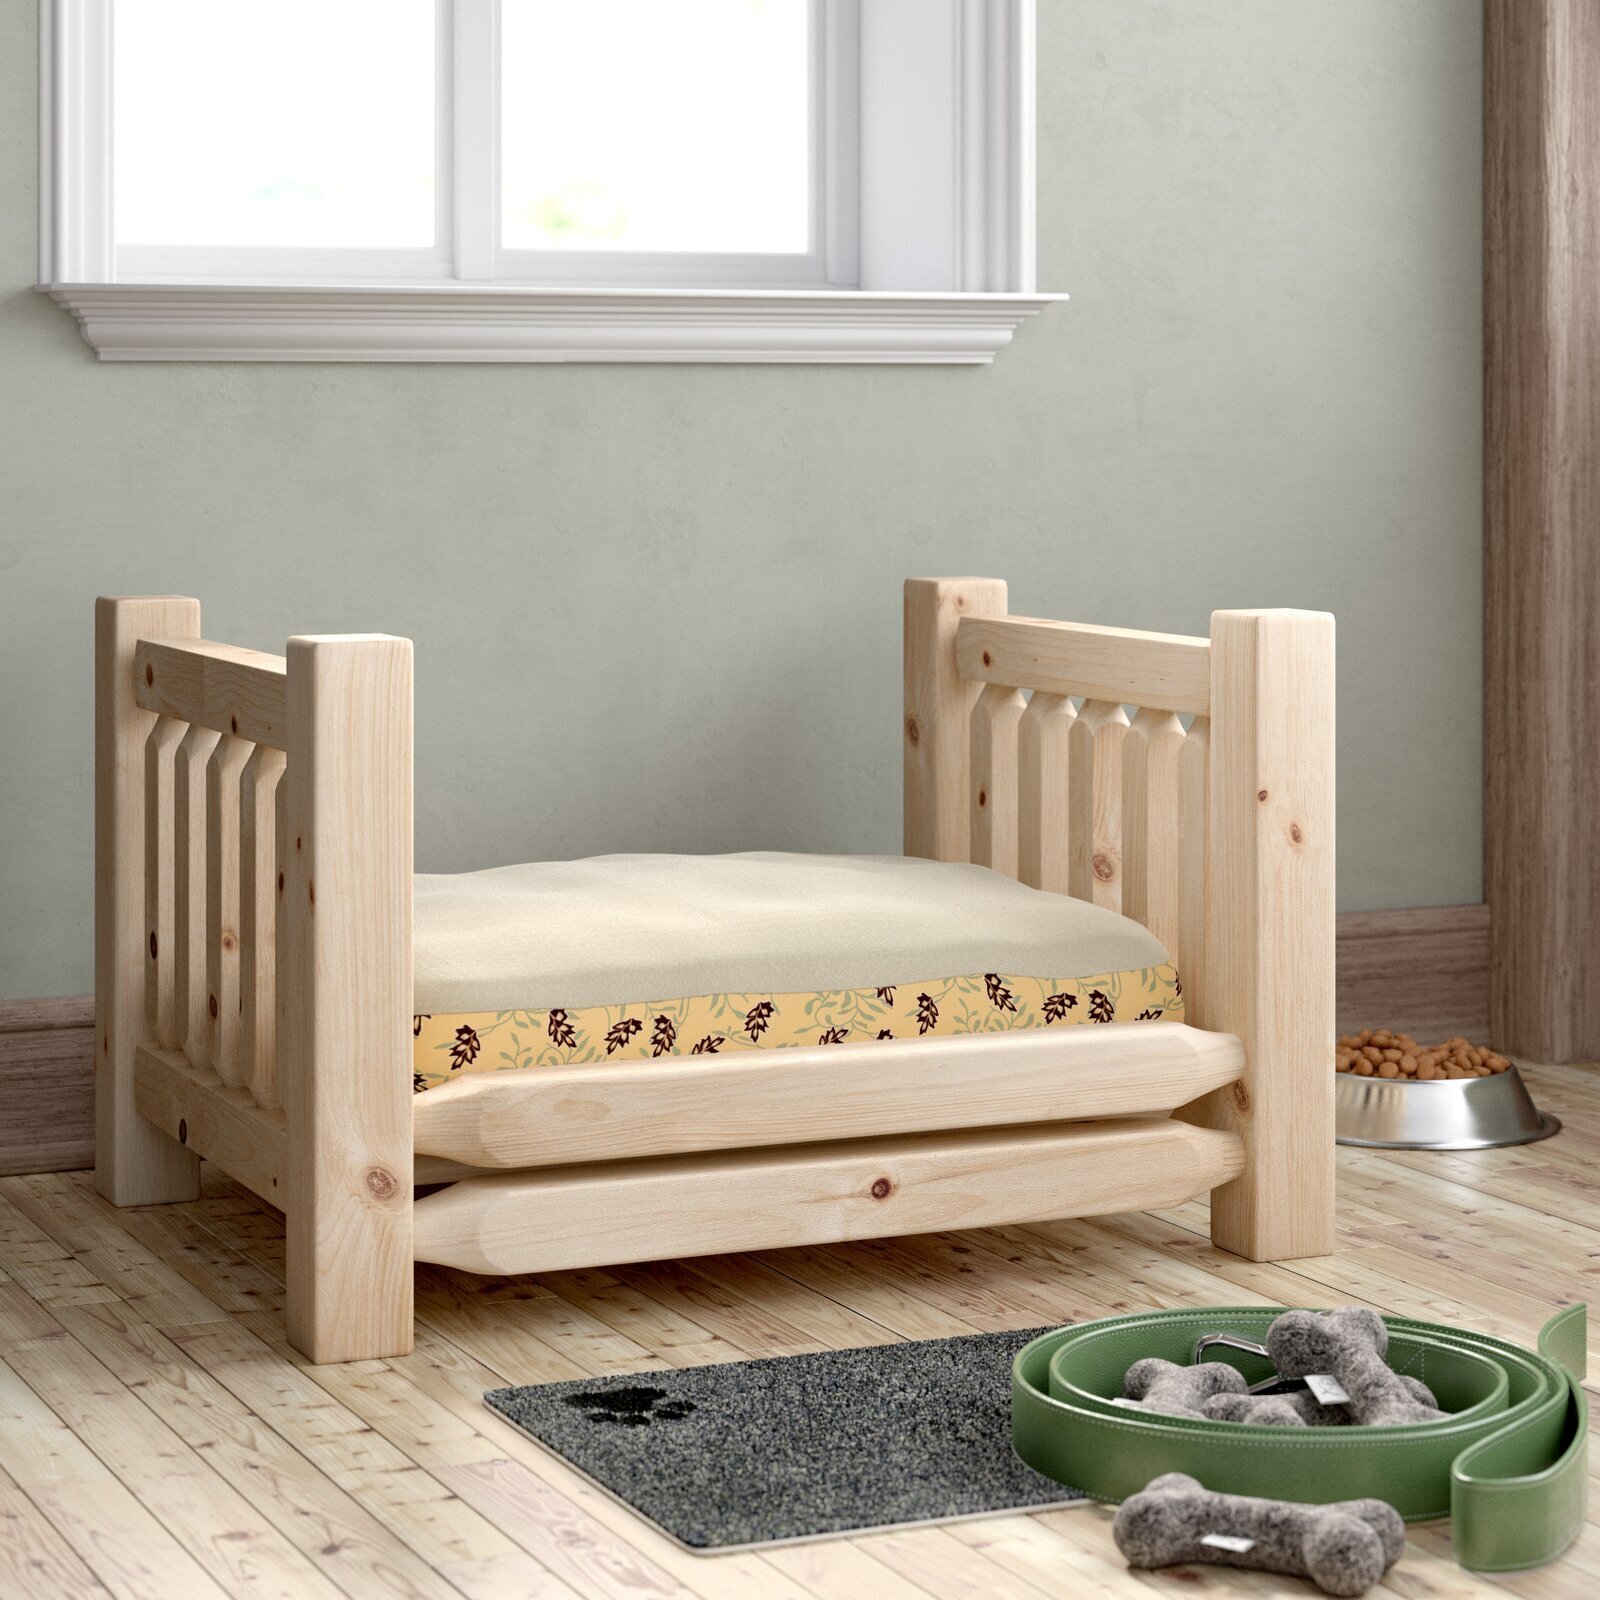 Wooden Dog Bed with Lodge Framework